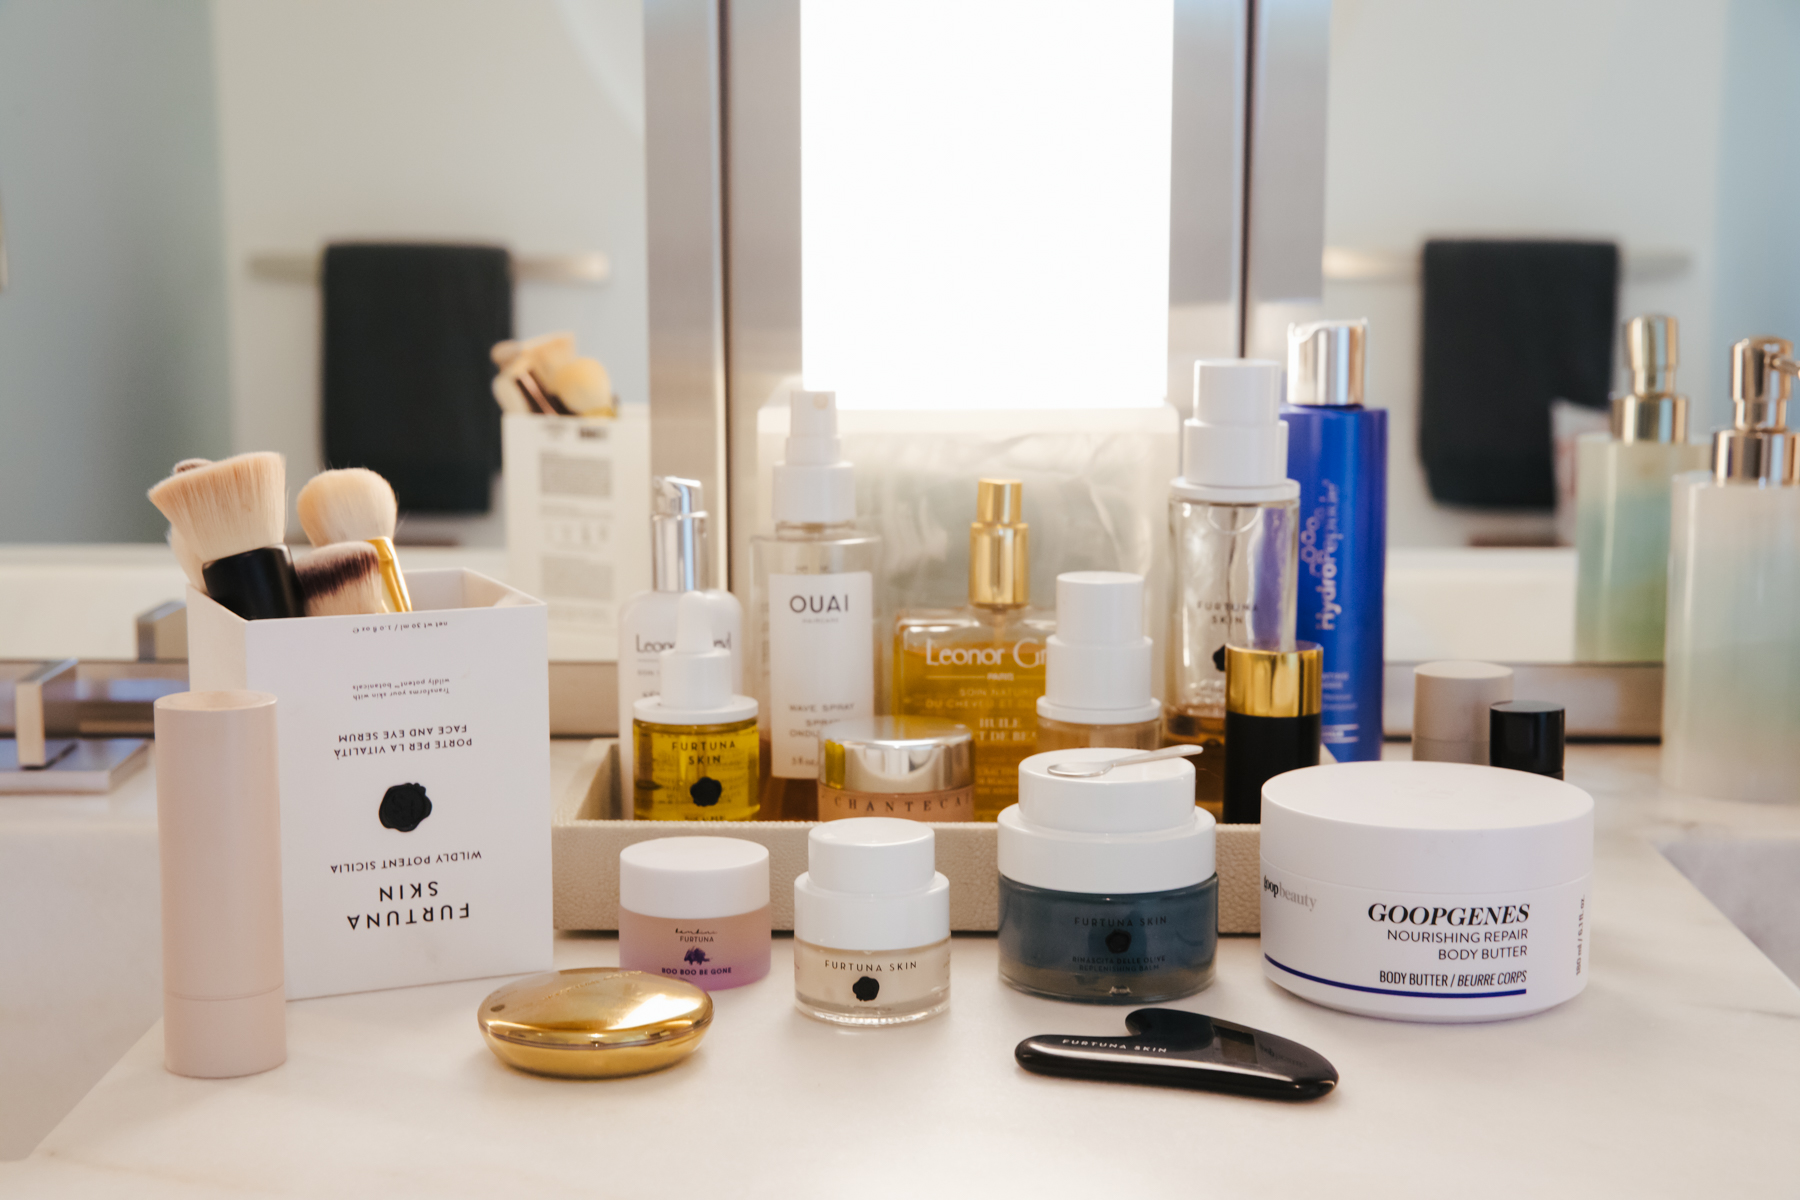 Skincare brands like furtuna and goop on a bathroom counter - andrea posadas photography